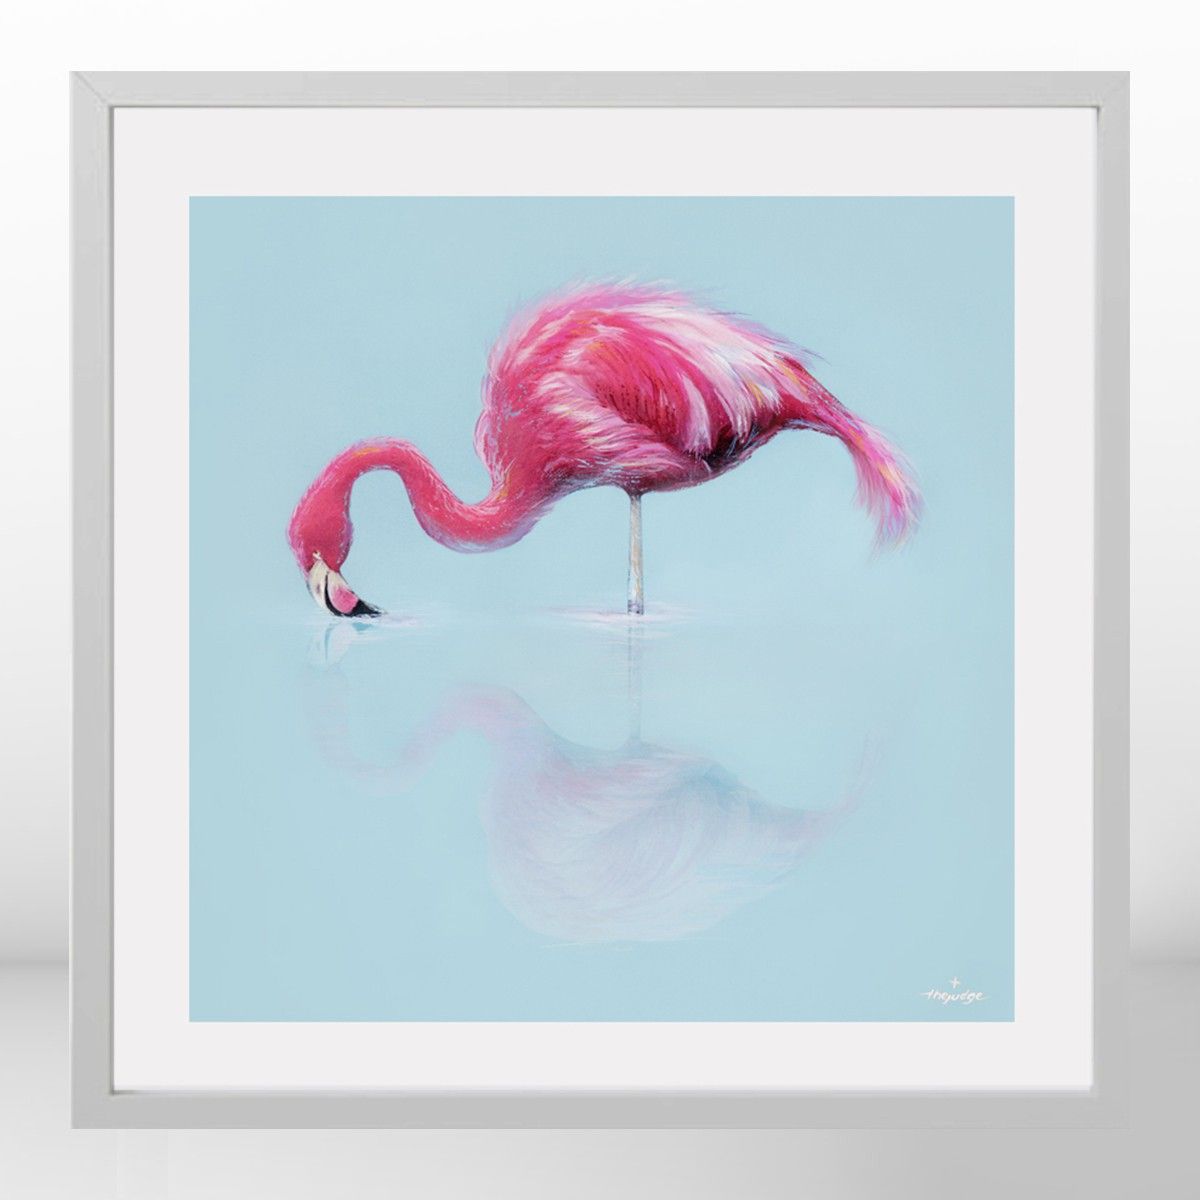 Tableau en verre - Bath Tub Flamingo - Carré